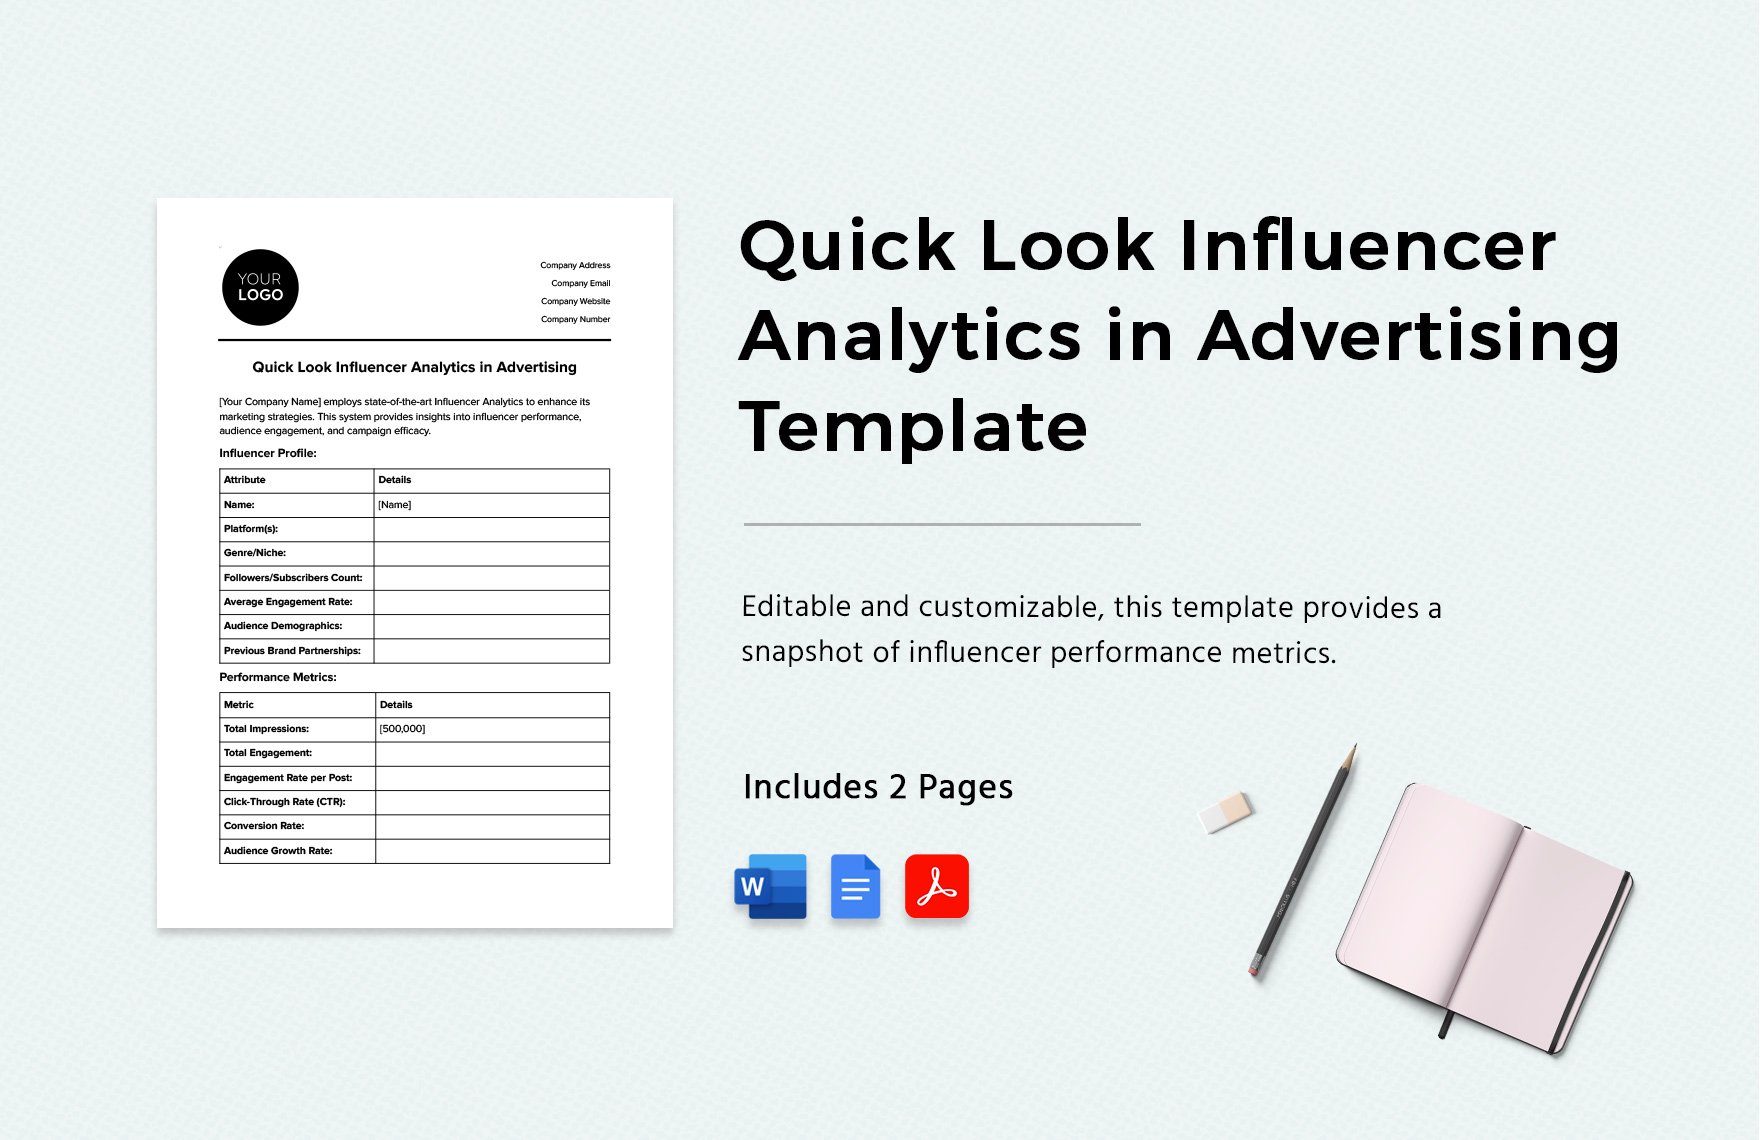 Quick Look Influencer Analytics in Advertising Template